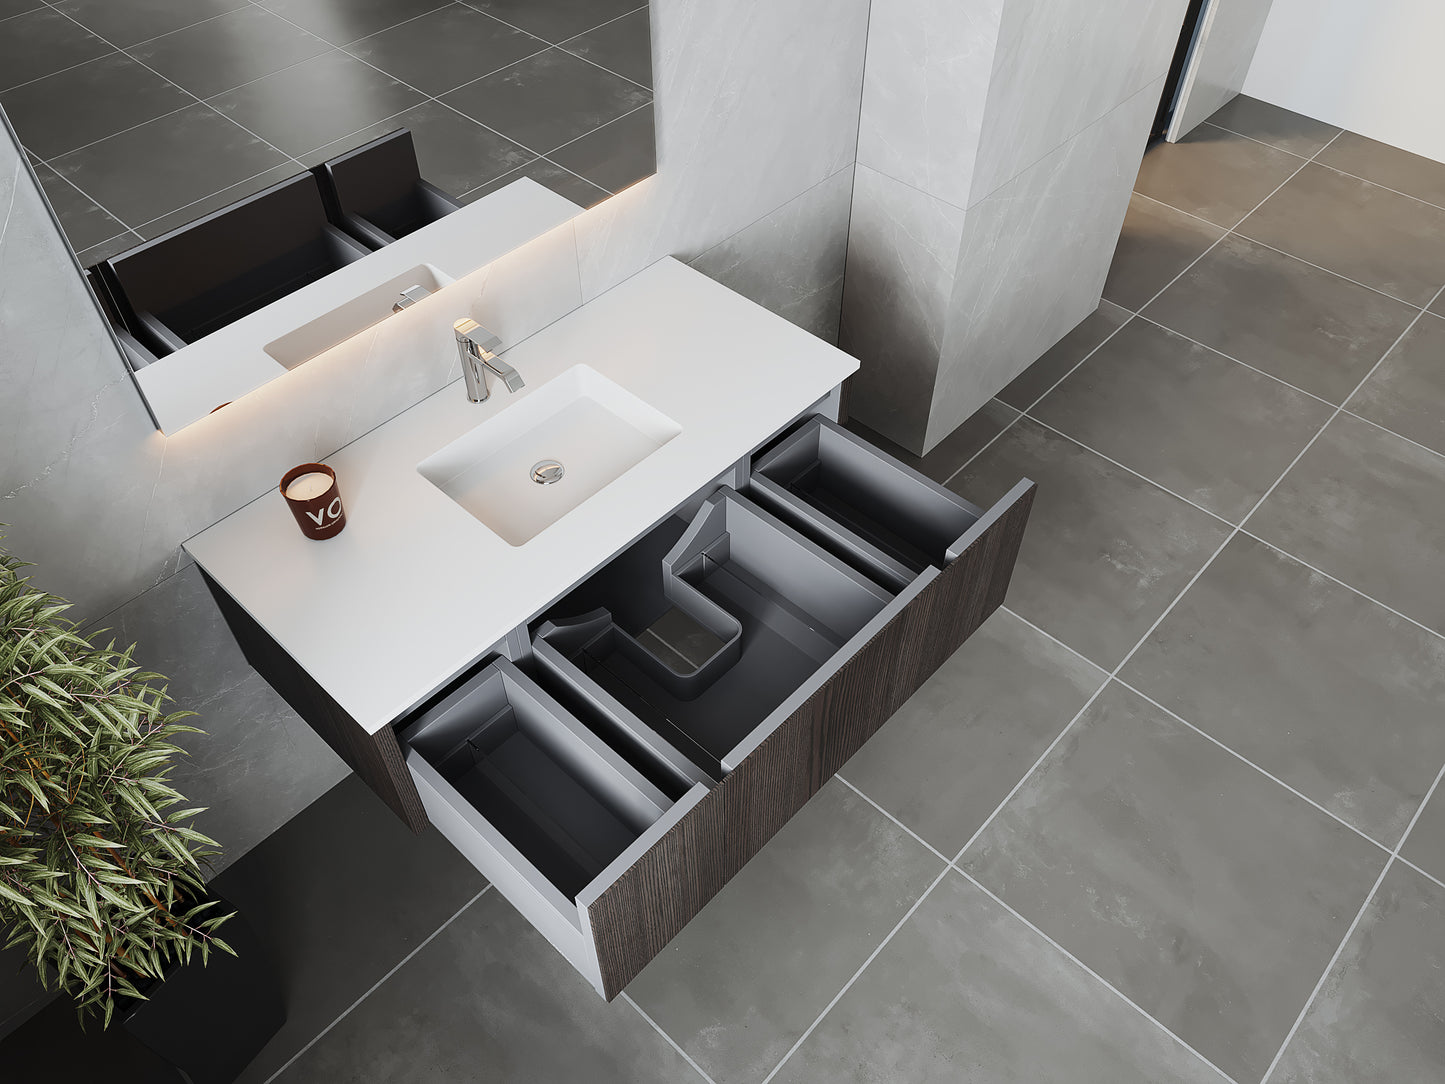 Legno 48" Carbon Oak Bathroom Vanity with Matte White VIVA Stone Solid Surface Countertop